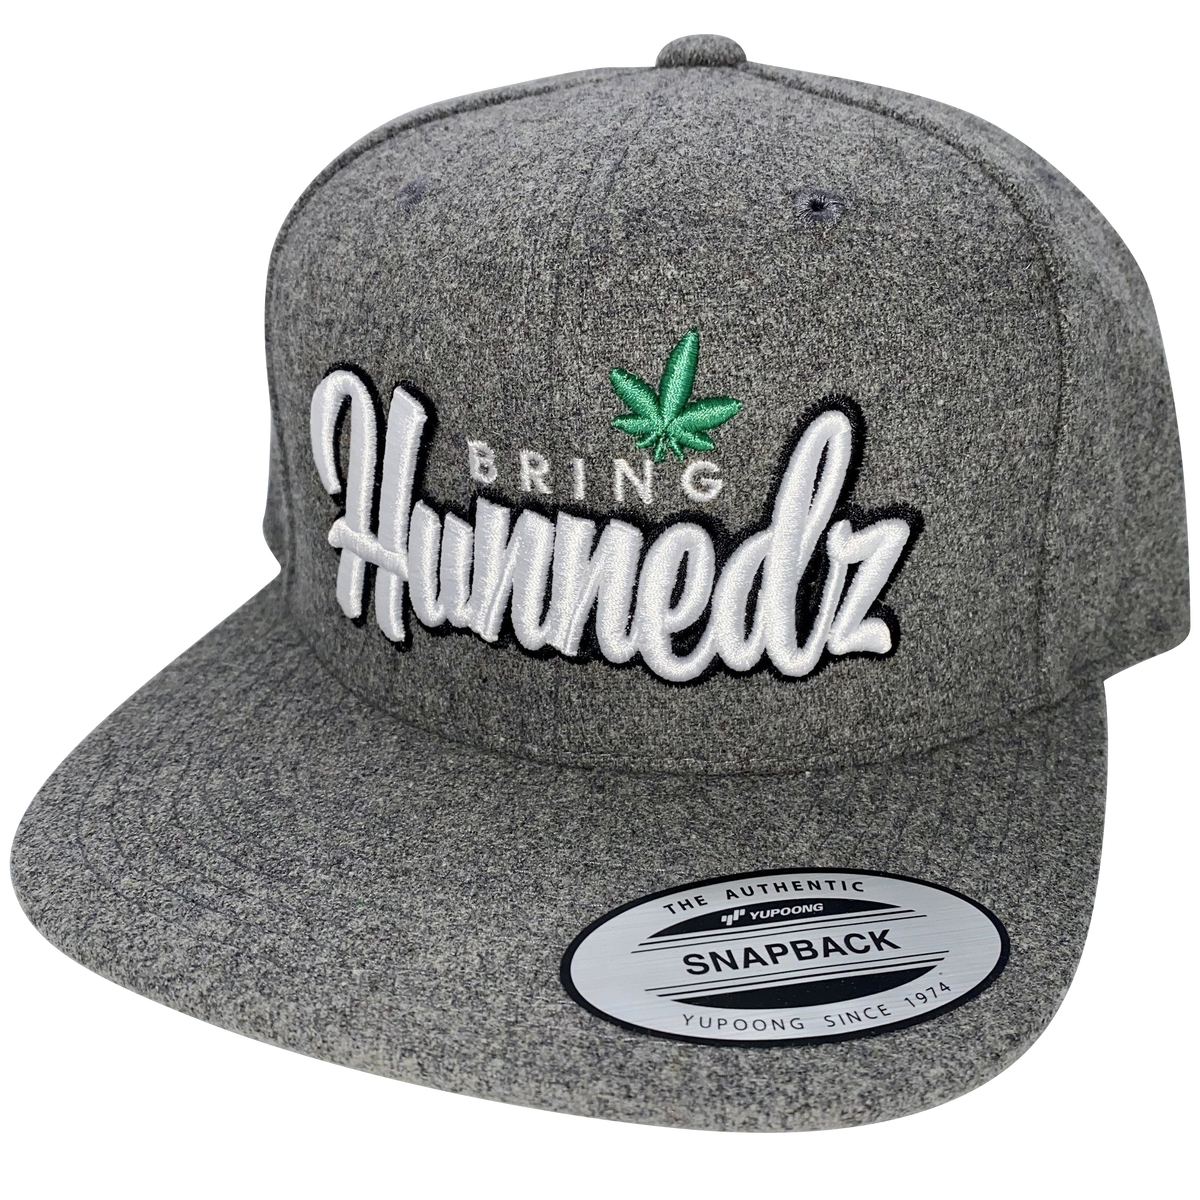 Bring Hunnedz Hat